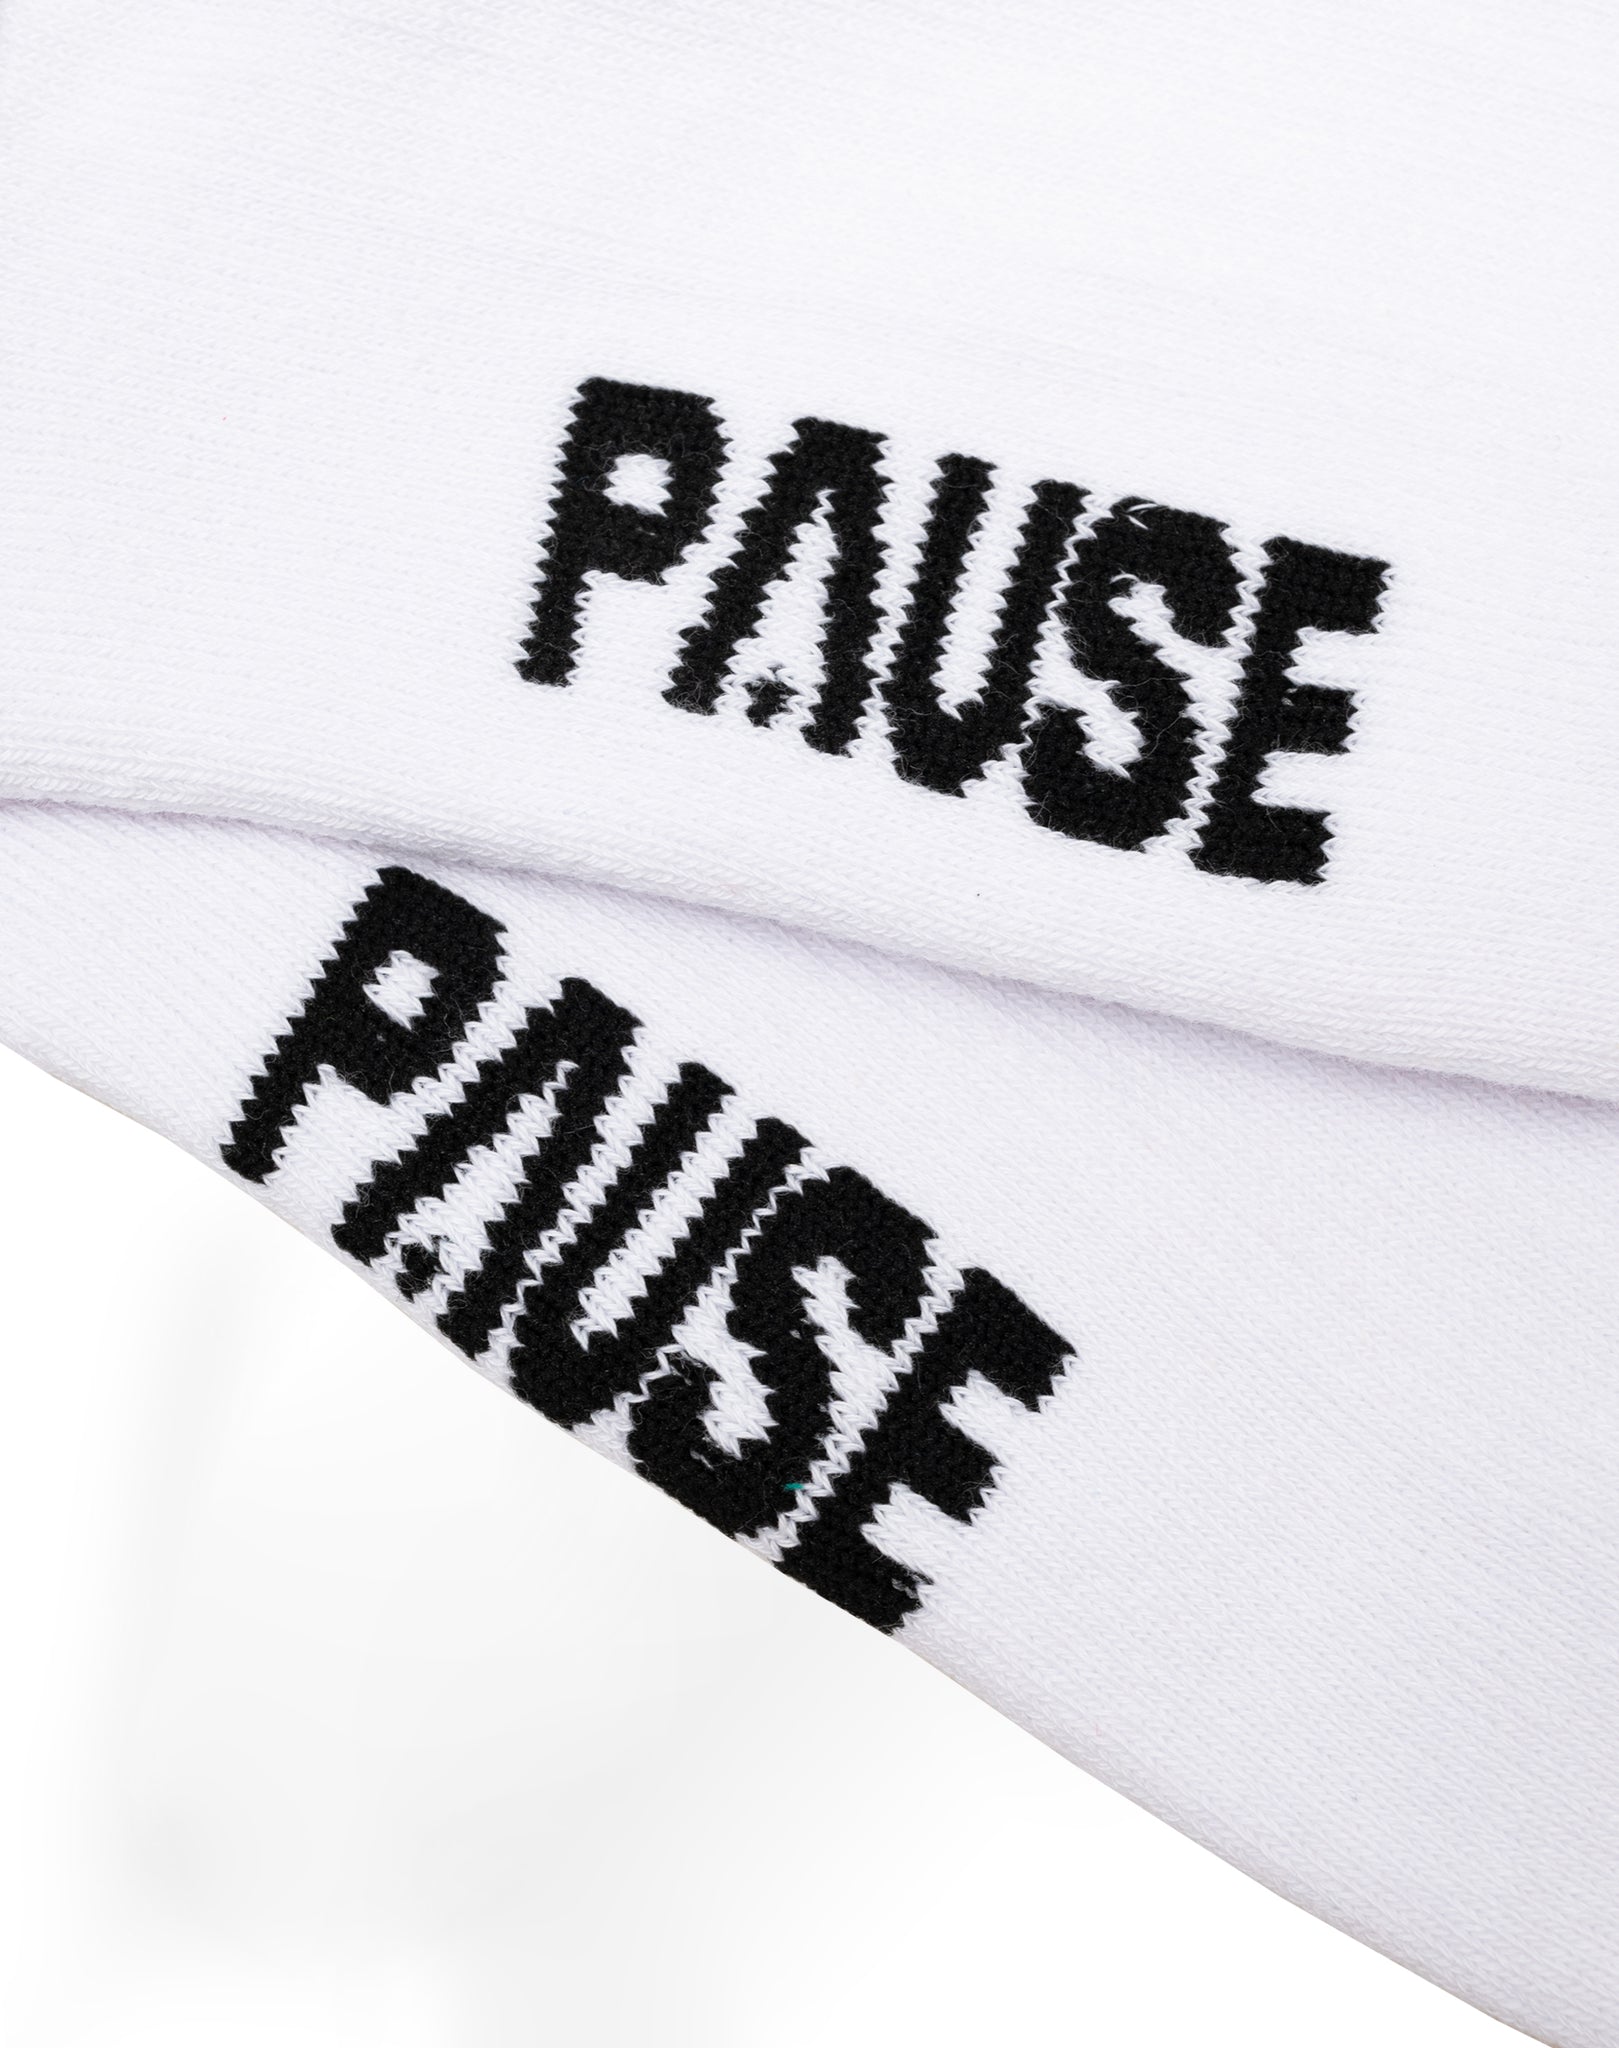 PAUSE 'Work Harder, Buy Prada' Socks